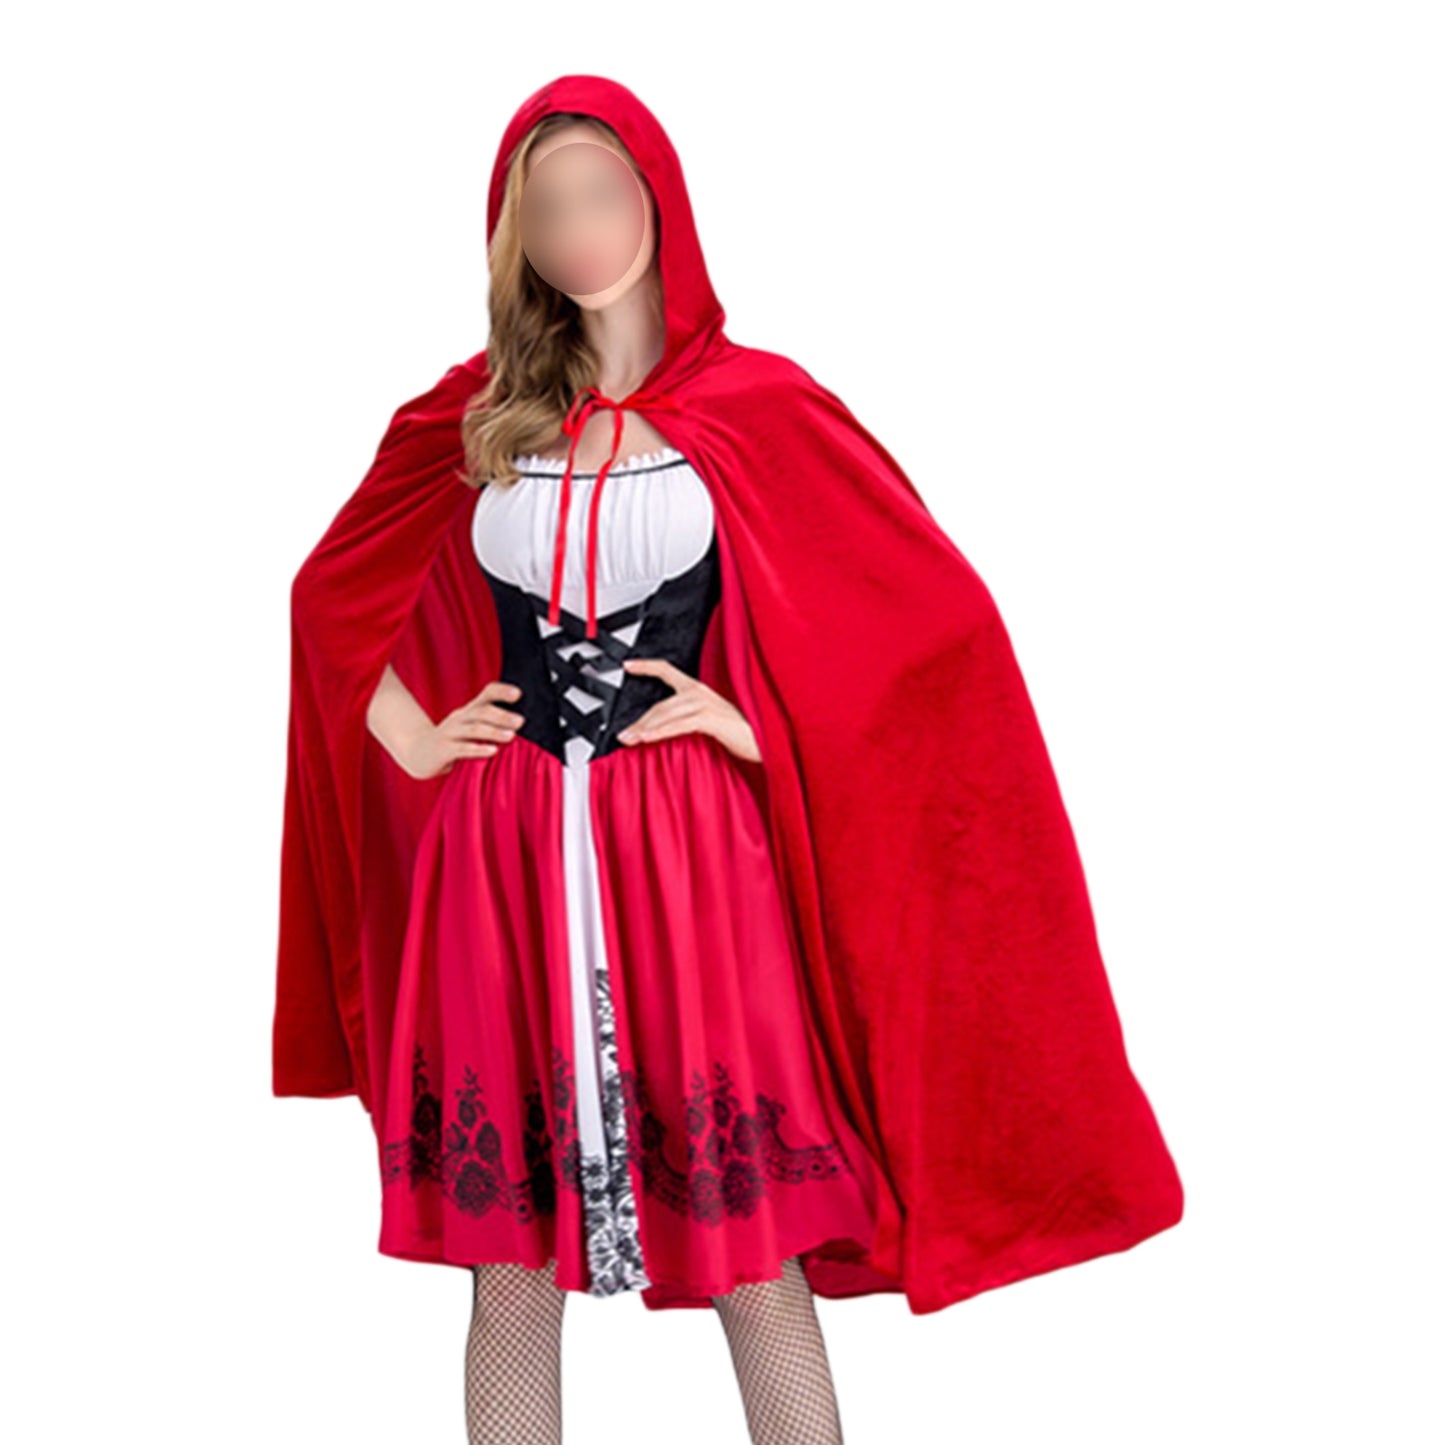 Latest Halloween Little Red Riding Hood Costume